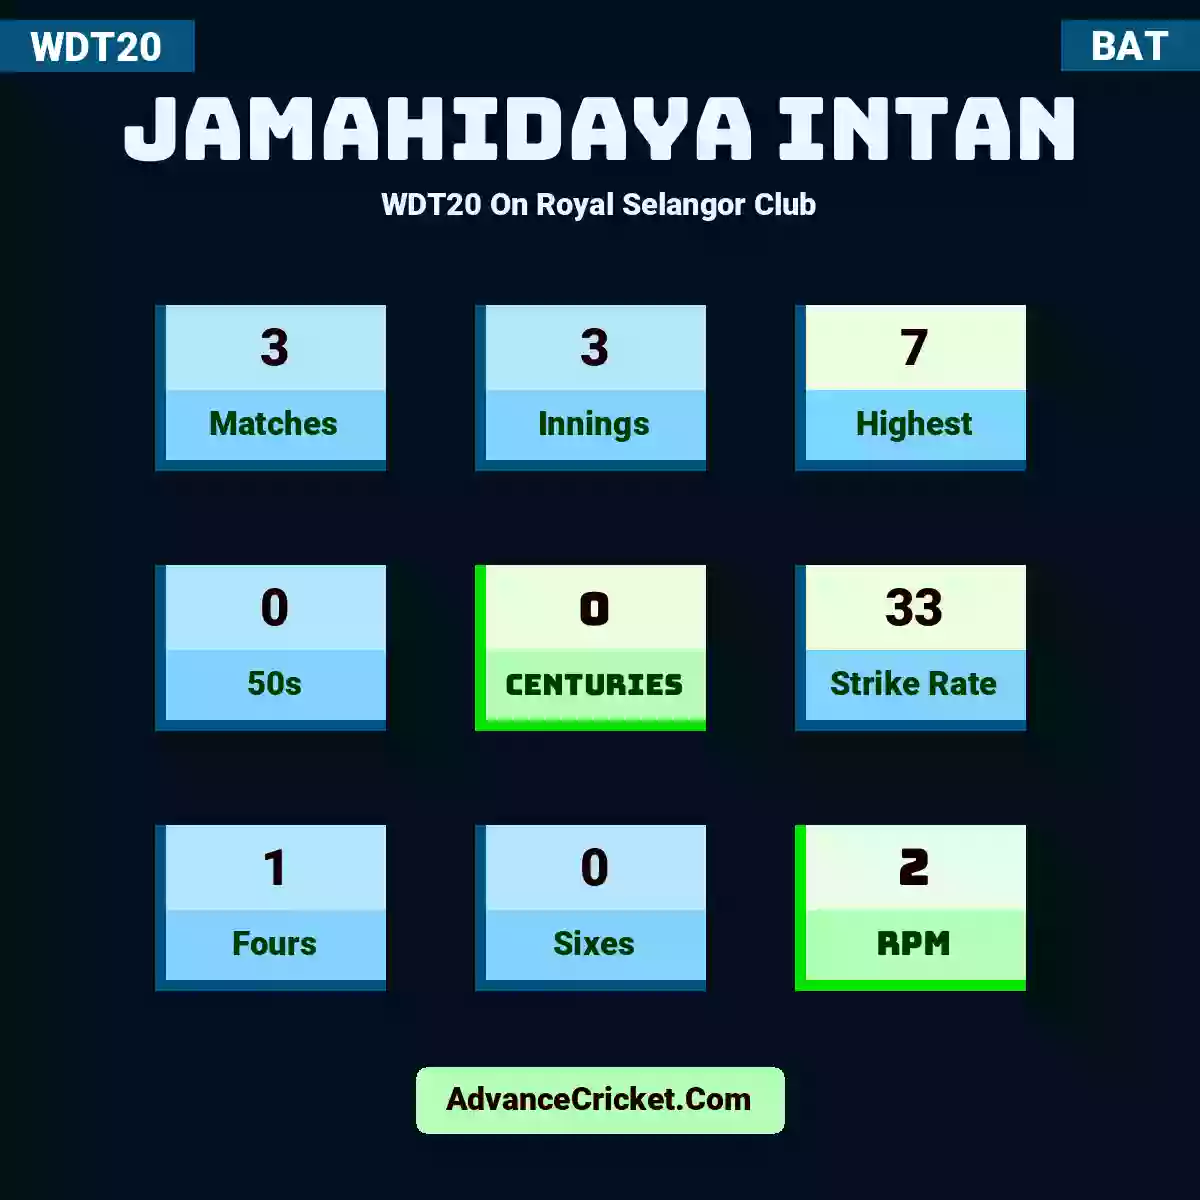 Jamahidaya Intan WDT20  On Royal Selangor Club, Jamahidaya Intan played 3 matches, scored 7 runs as highest, 0 half-centuries, and 0 centuries, with a strike rate of 33. J.Intan hit 1 fours and 0 sixes, with an RPM of 2.